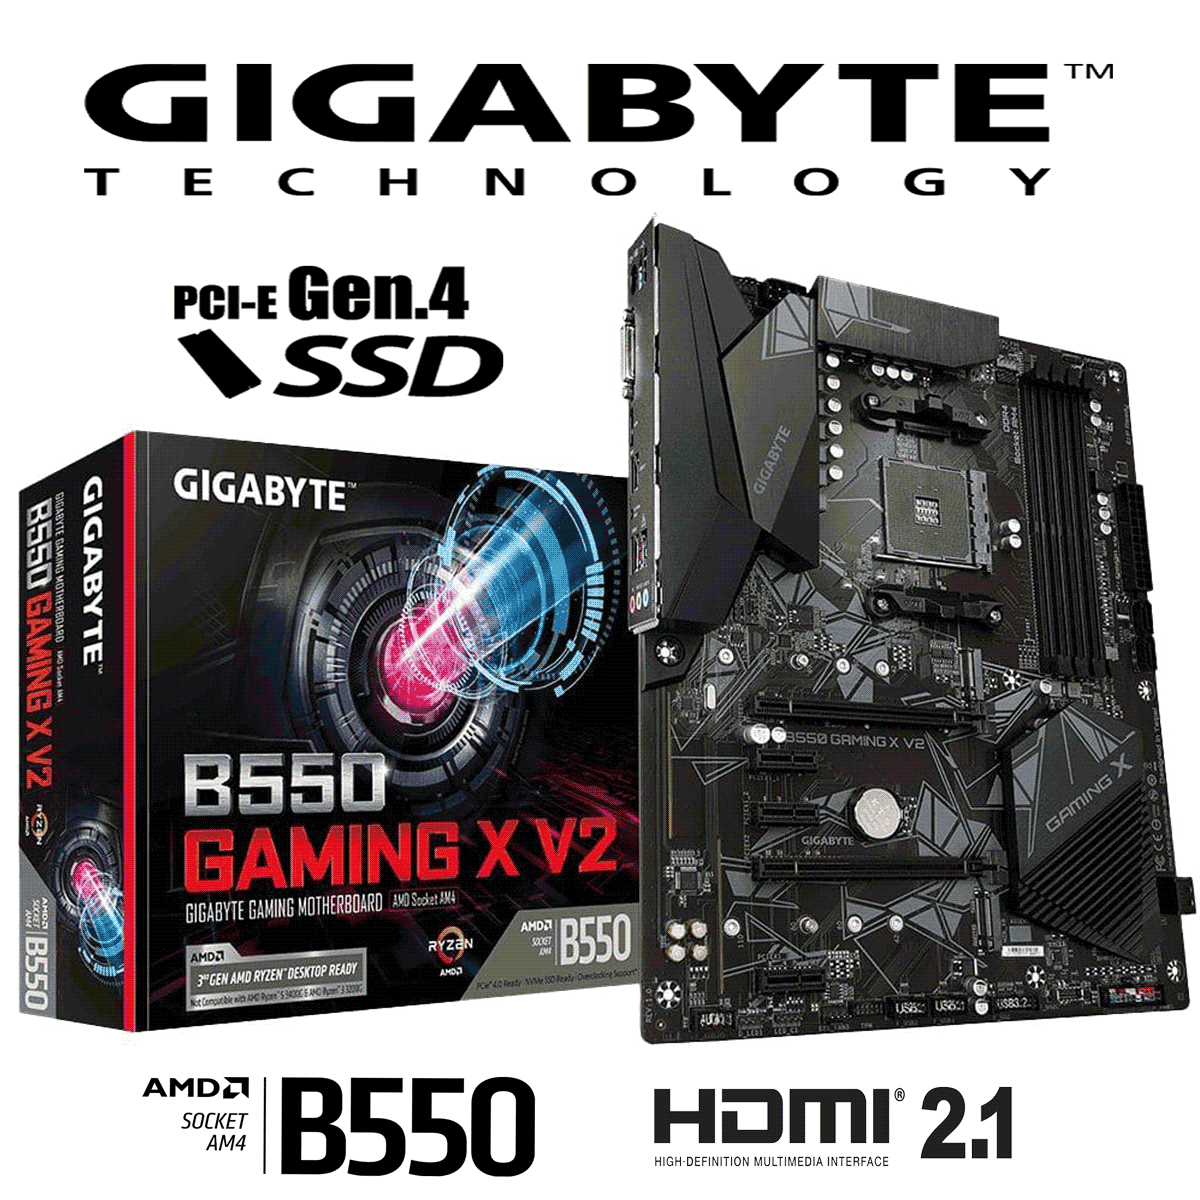 PC Bundle • AMD Ryzen 7 5800X • GIGABYTE B550 Gaming X V2 • 16GB DDR4-3200 Ram